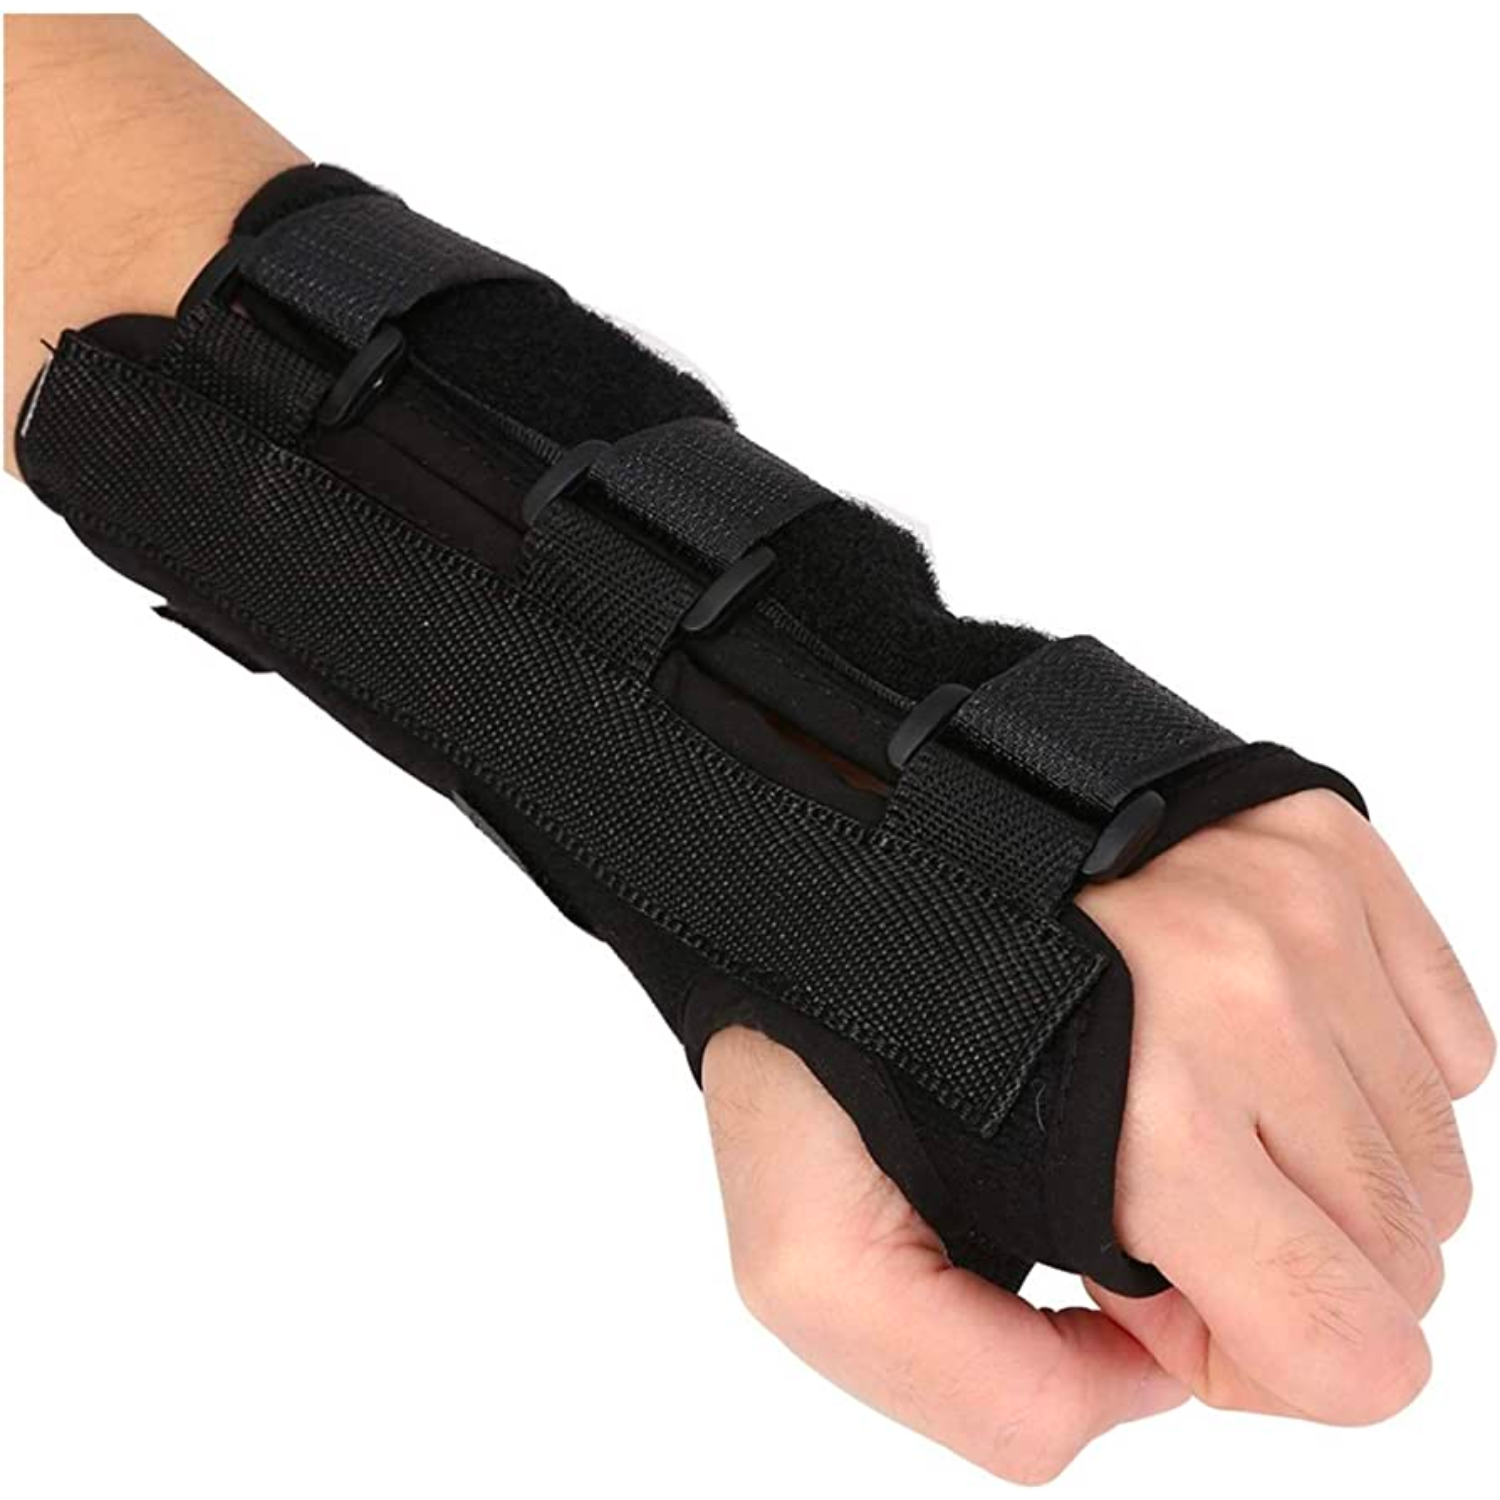 1pc professional wrist support splint arthritis band belt carpal tunnel wrist brace sprain prevention wrist protector for fitness